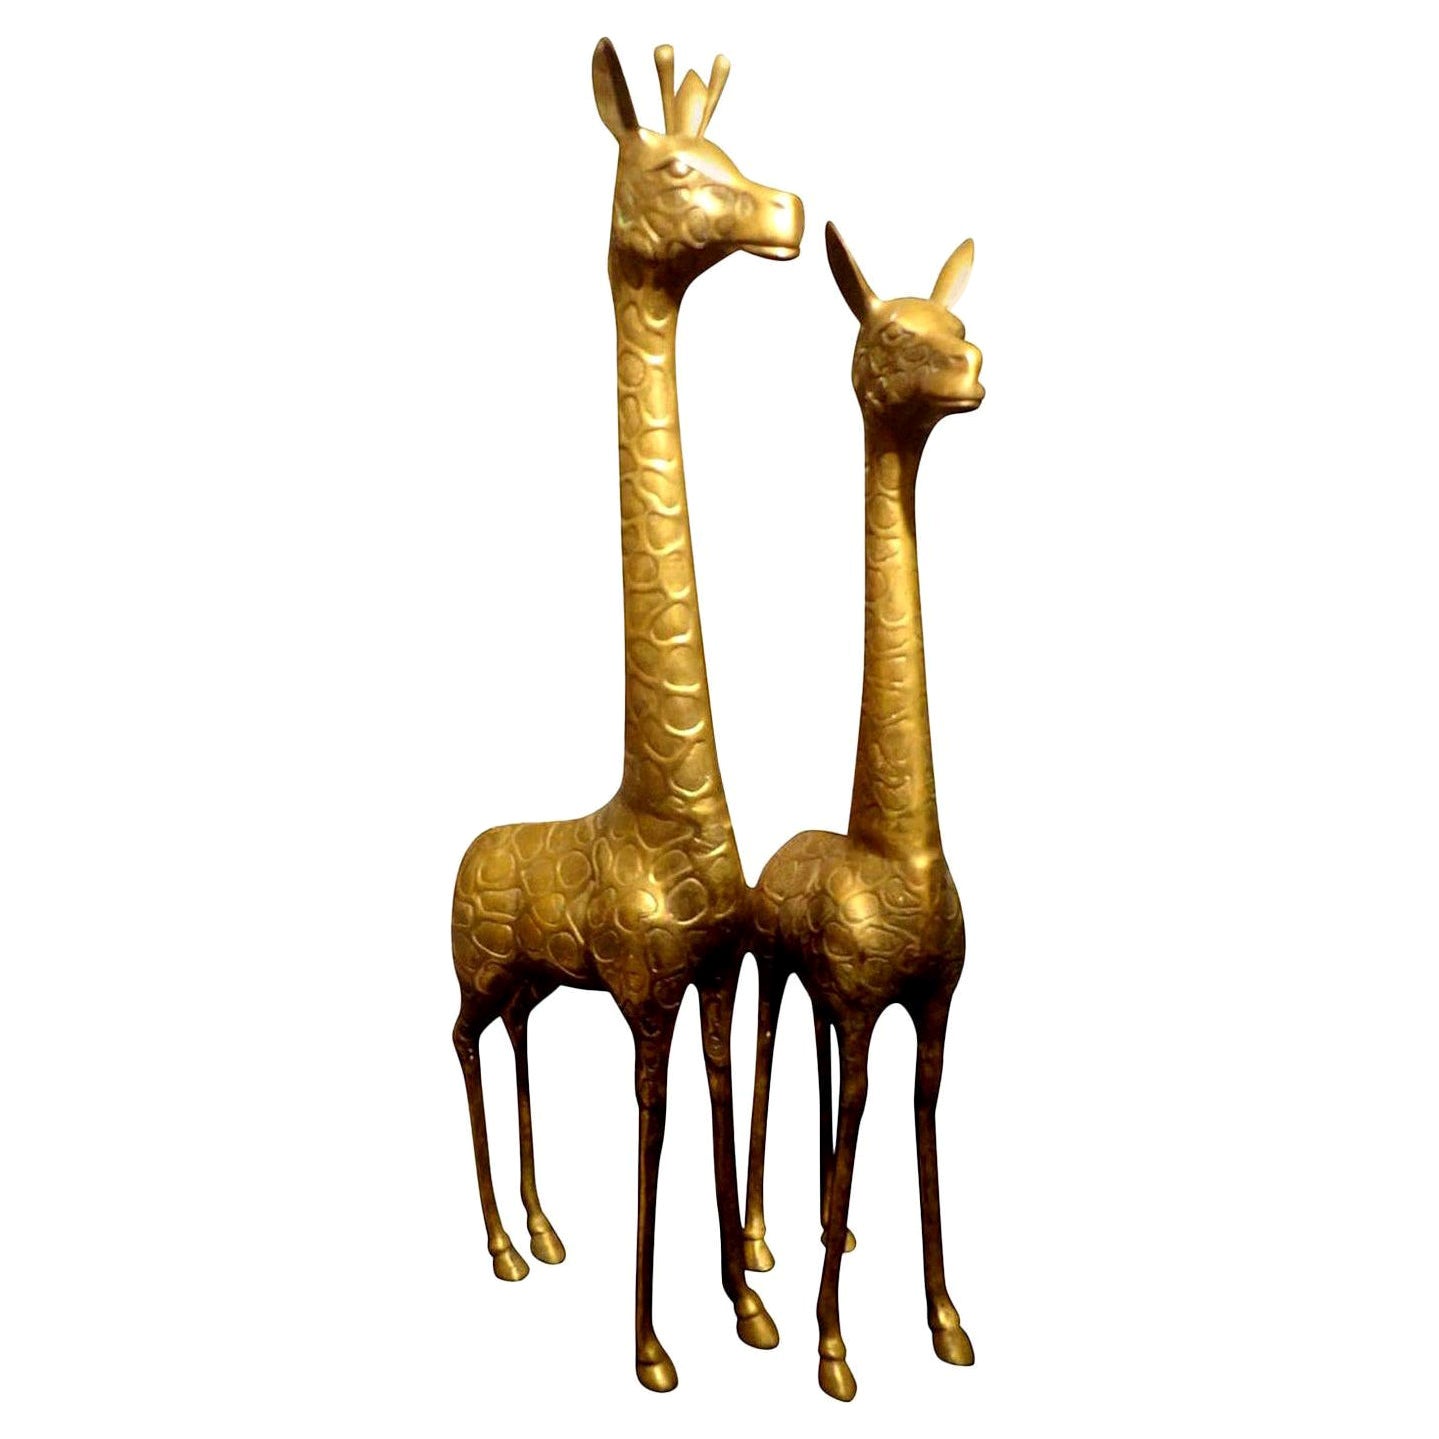 Details about   Giraffe Antique Silver Sculpture Beautiful Home Decor or Gift Idea H27.5cm 41215 